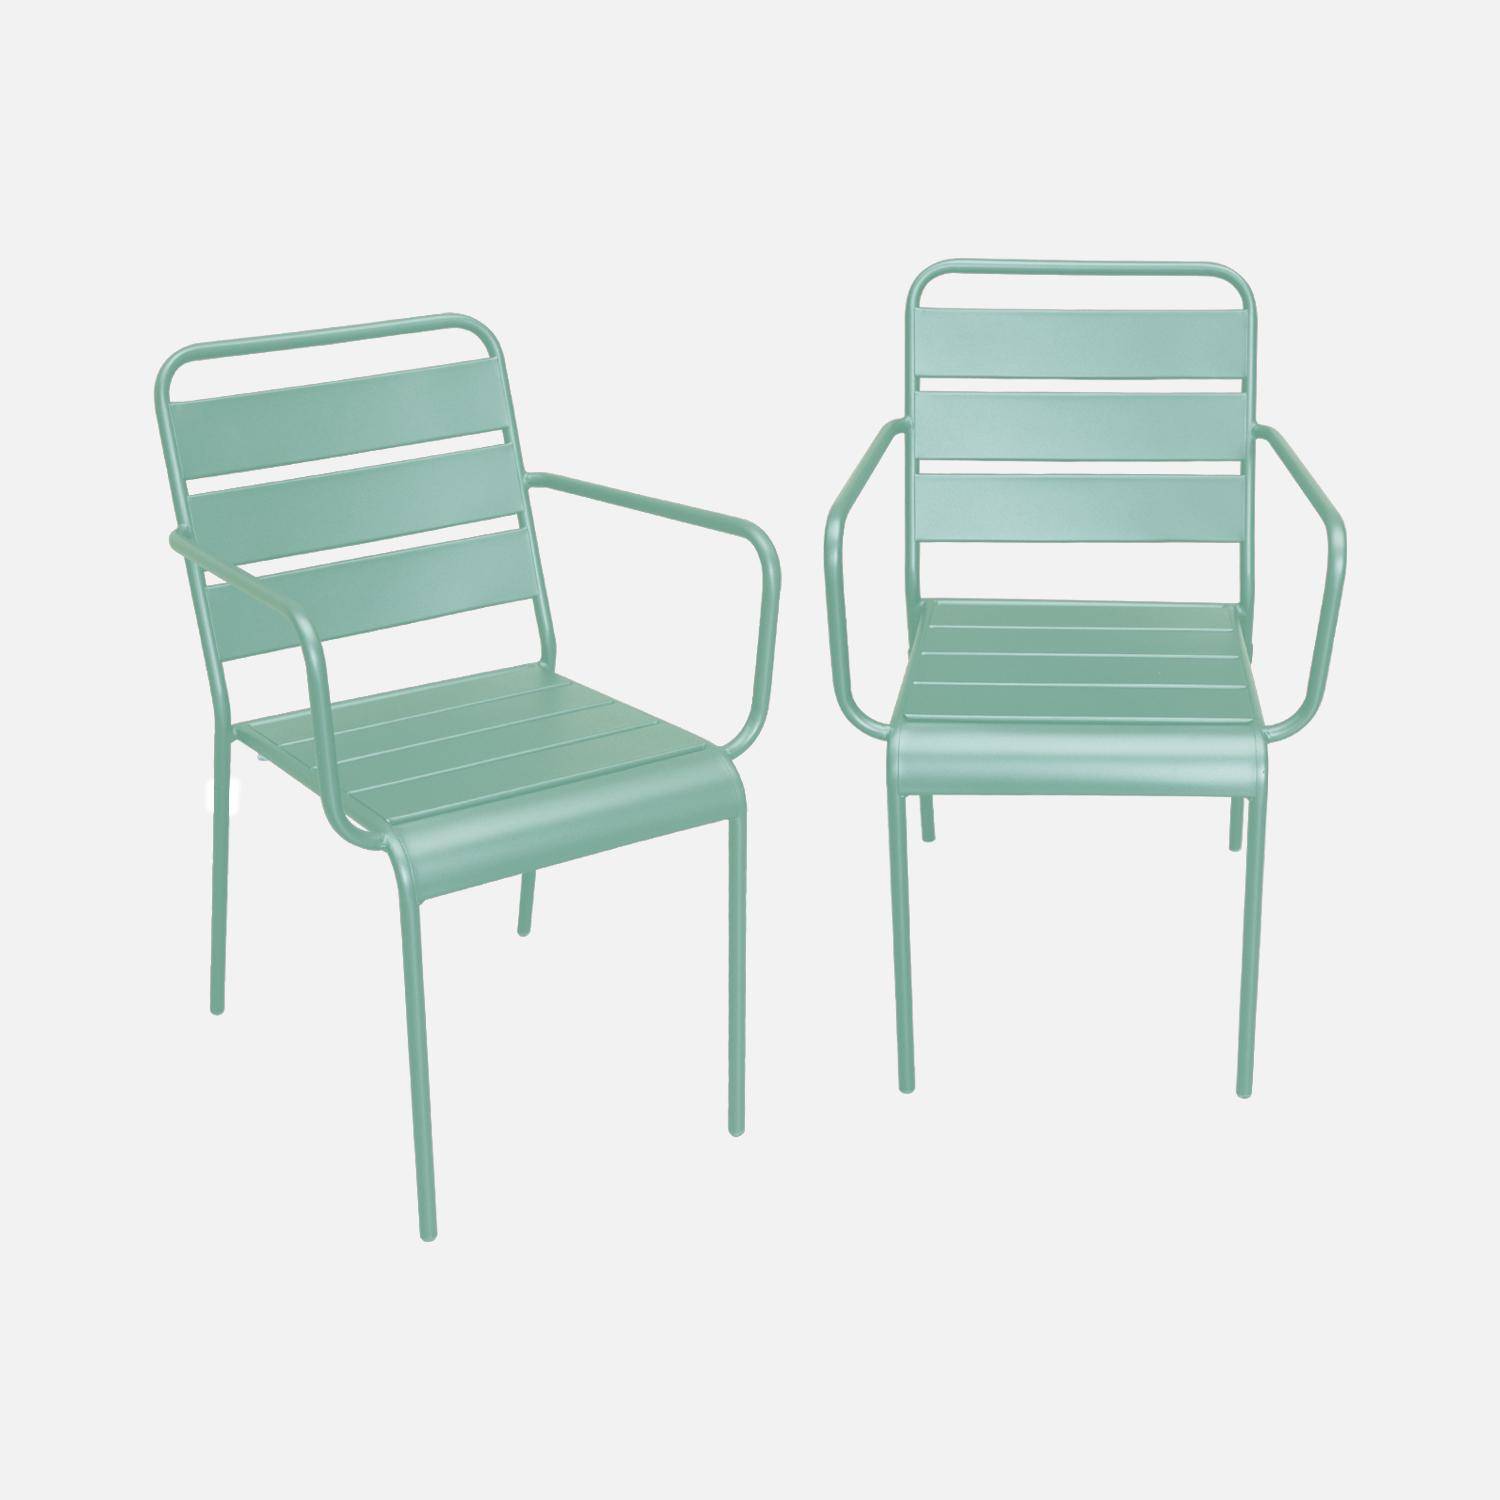 Table de jardin en métal 160x90cm + 4 chaises empilables et 2 fauteuils vert jade,sweeek,Photo4